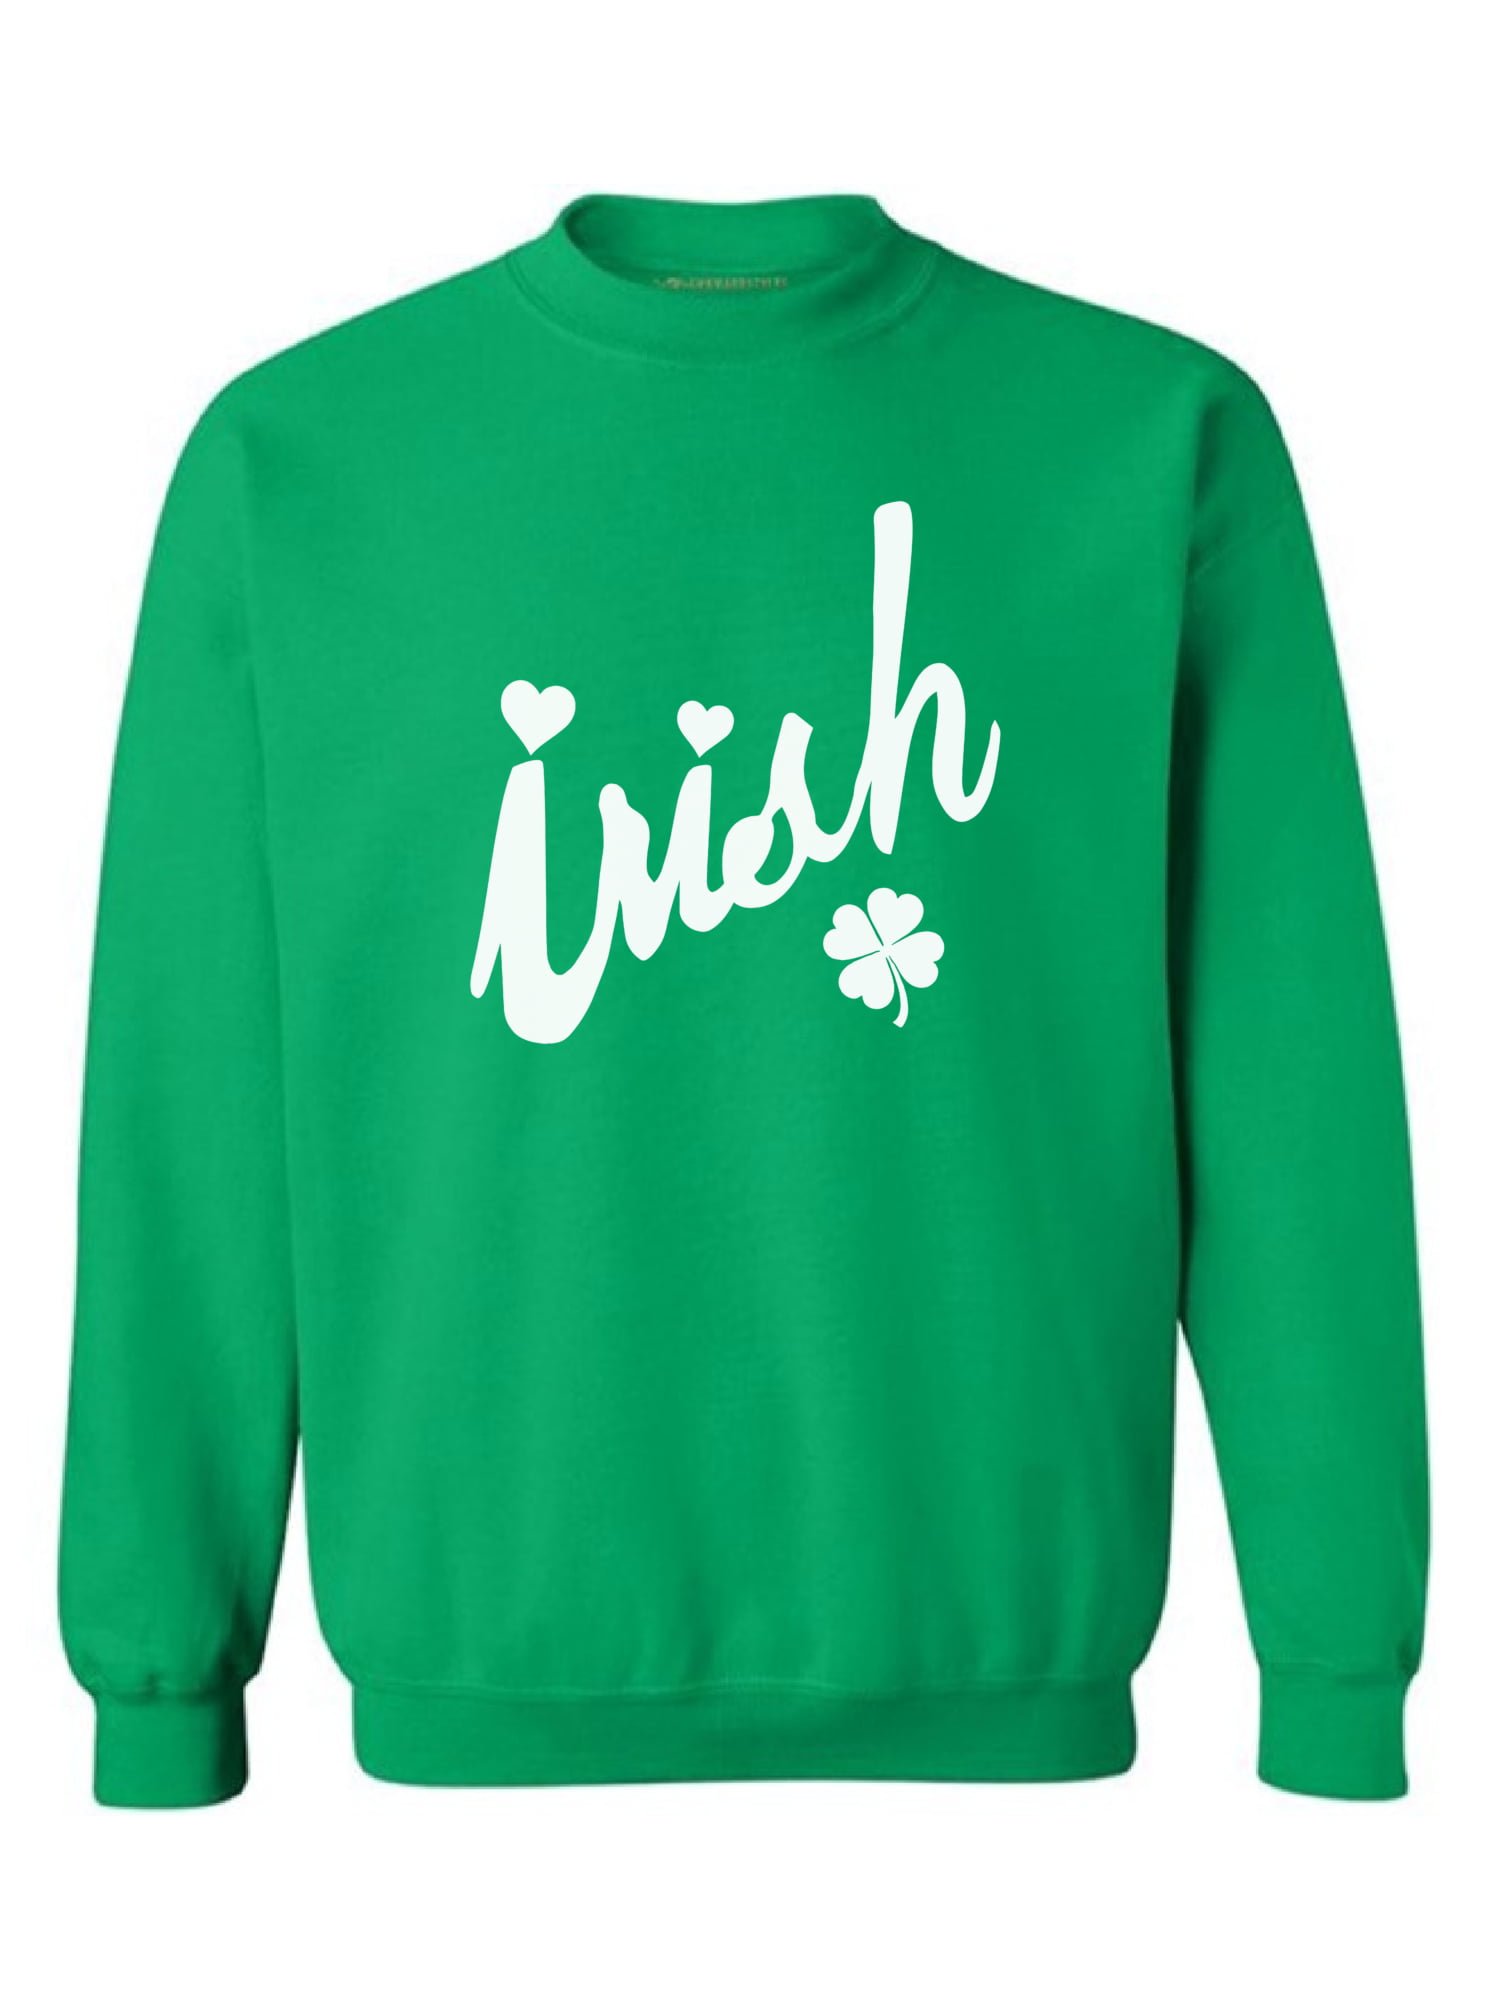 Irish Sweatshirt,Four Leaf Clover St Pattys Day Women’s St Patricks Day Shirt Lucky Sweatshirt Crewneck Shamrock Sweatshirt St Patricks